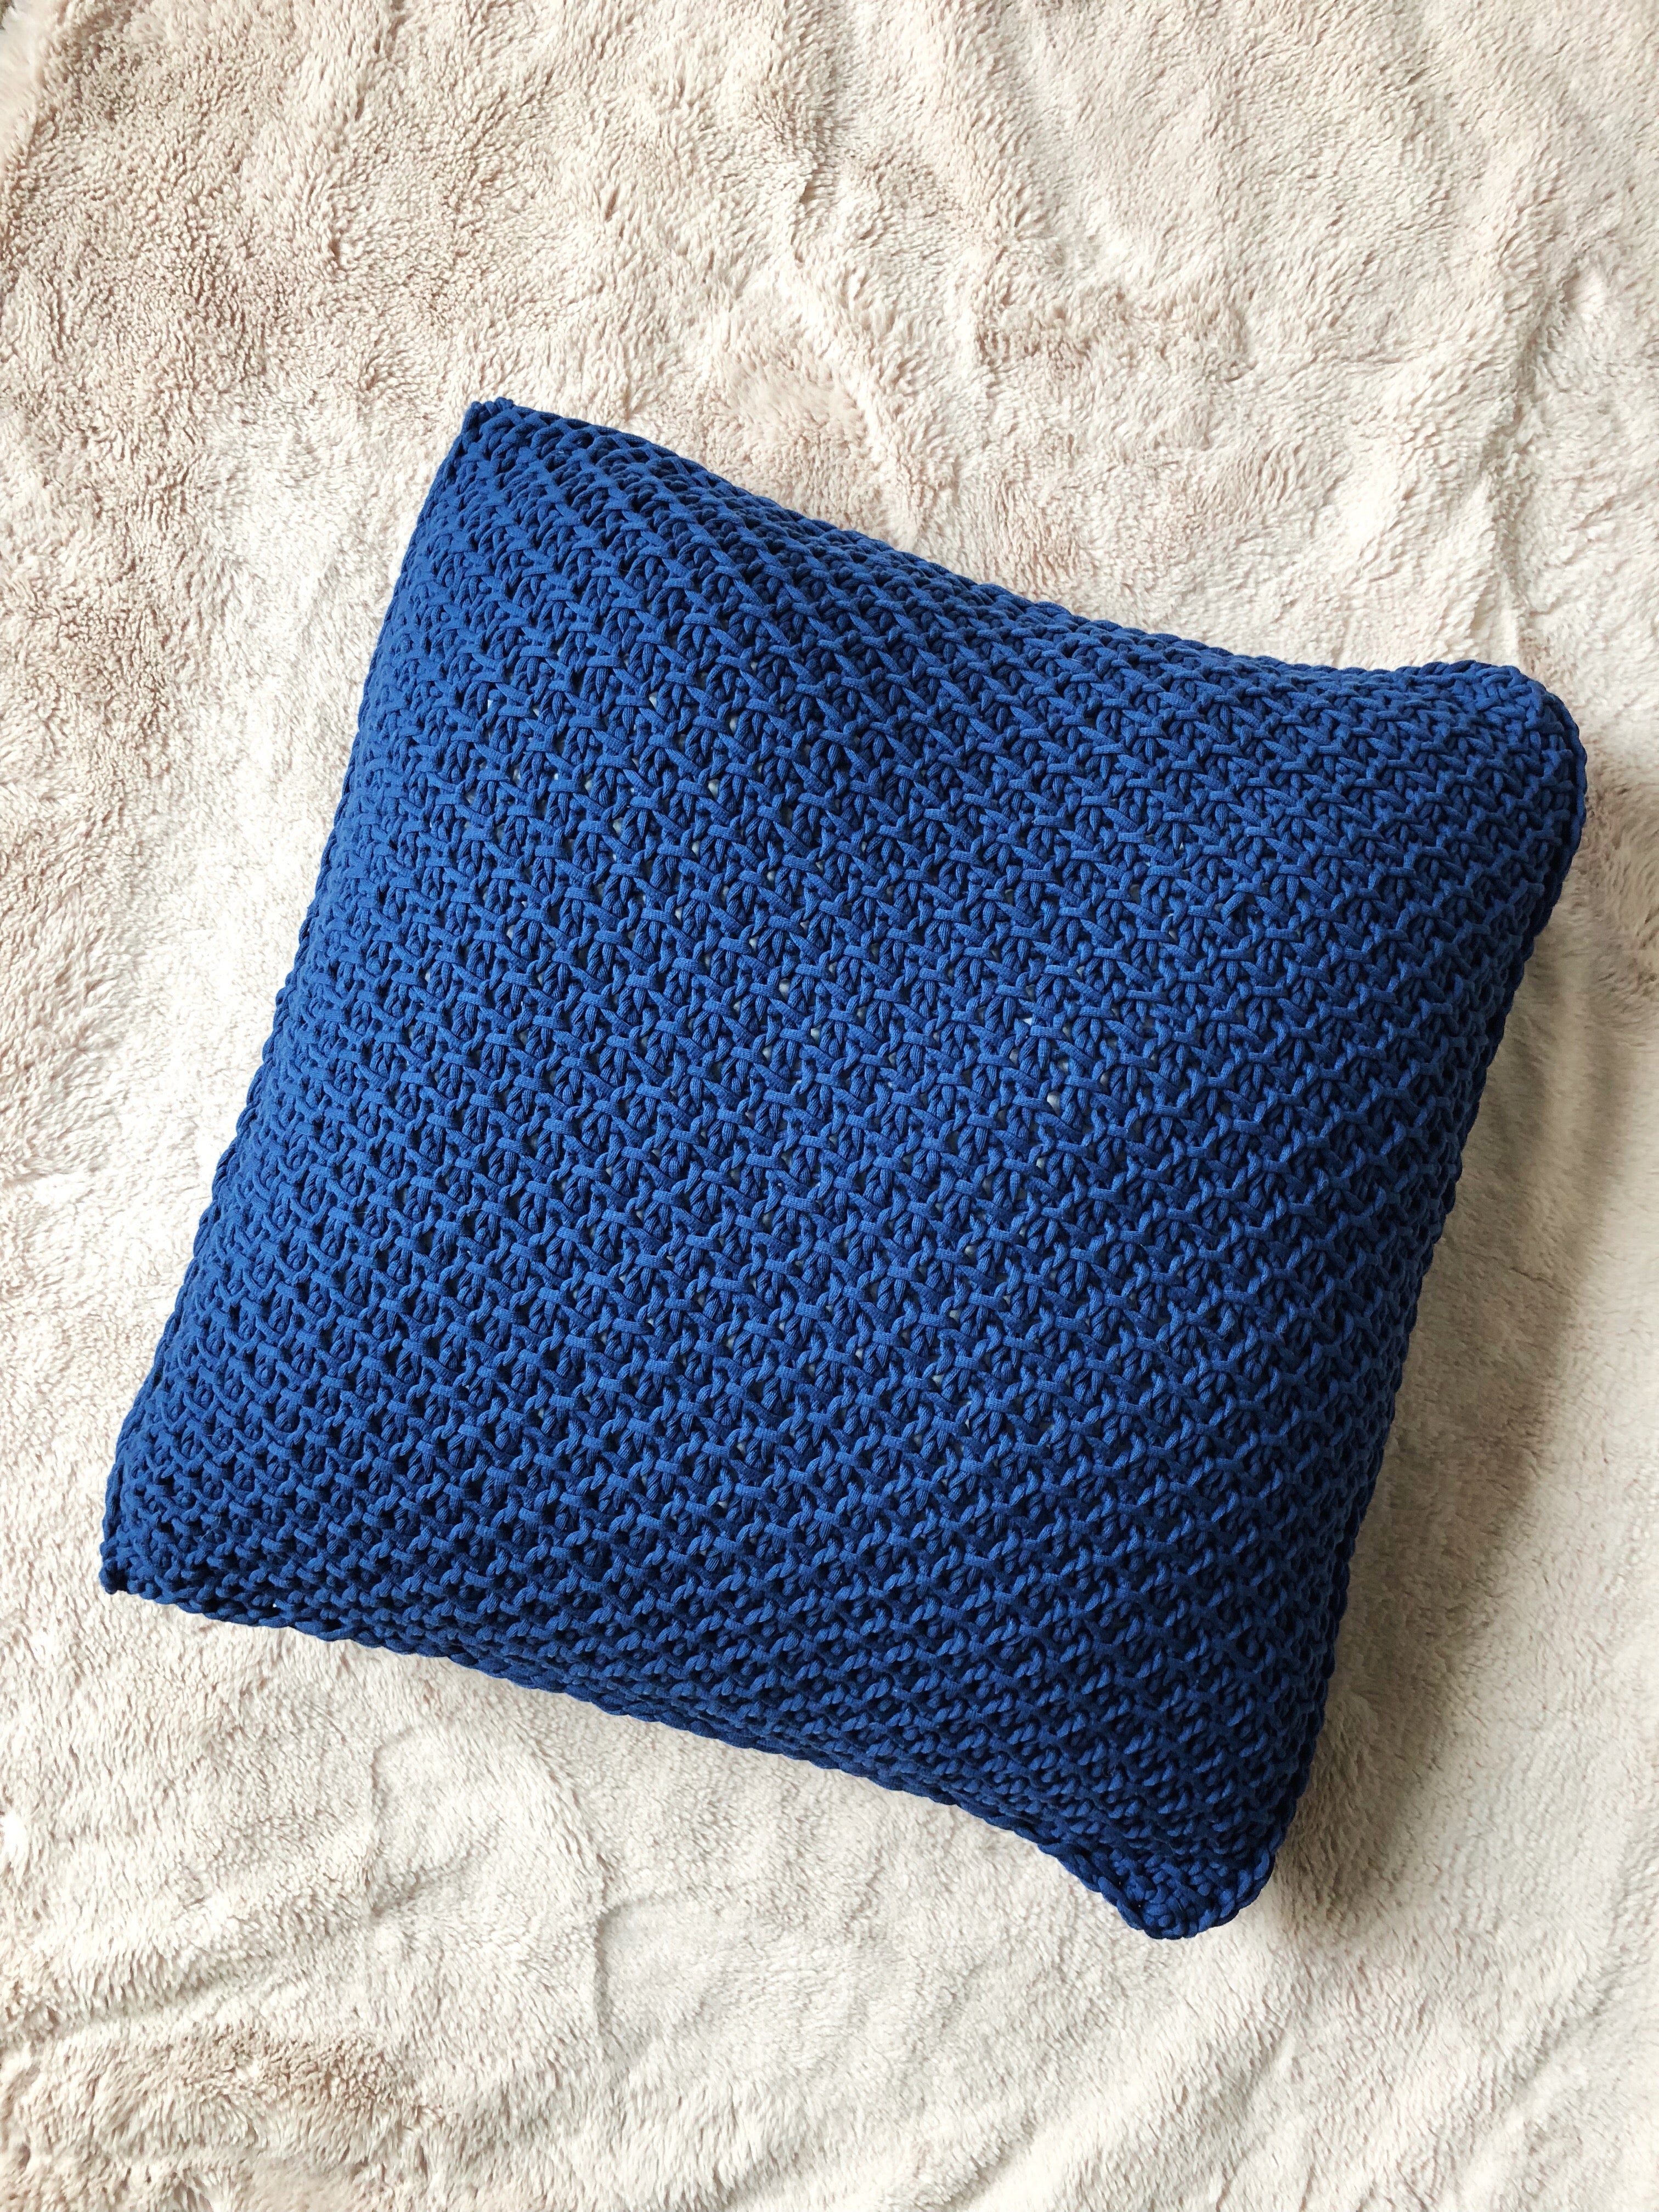 Log Cabin Throw Pillow // Tunisian Crochet PDF Pattern